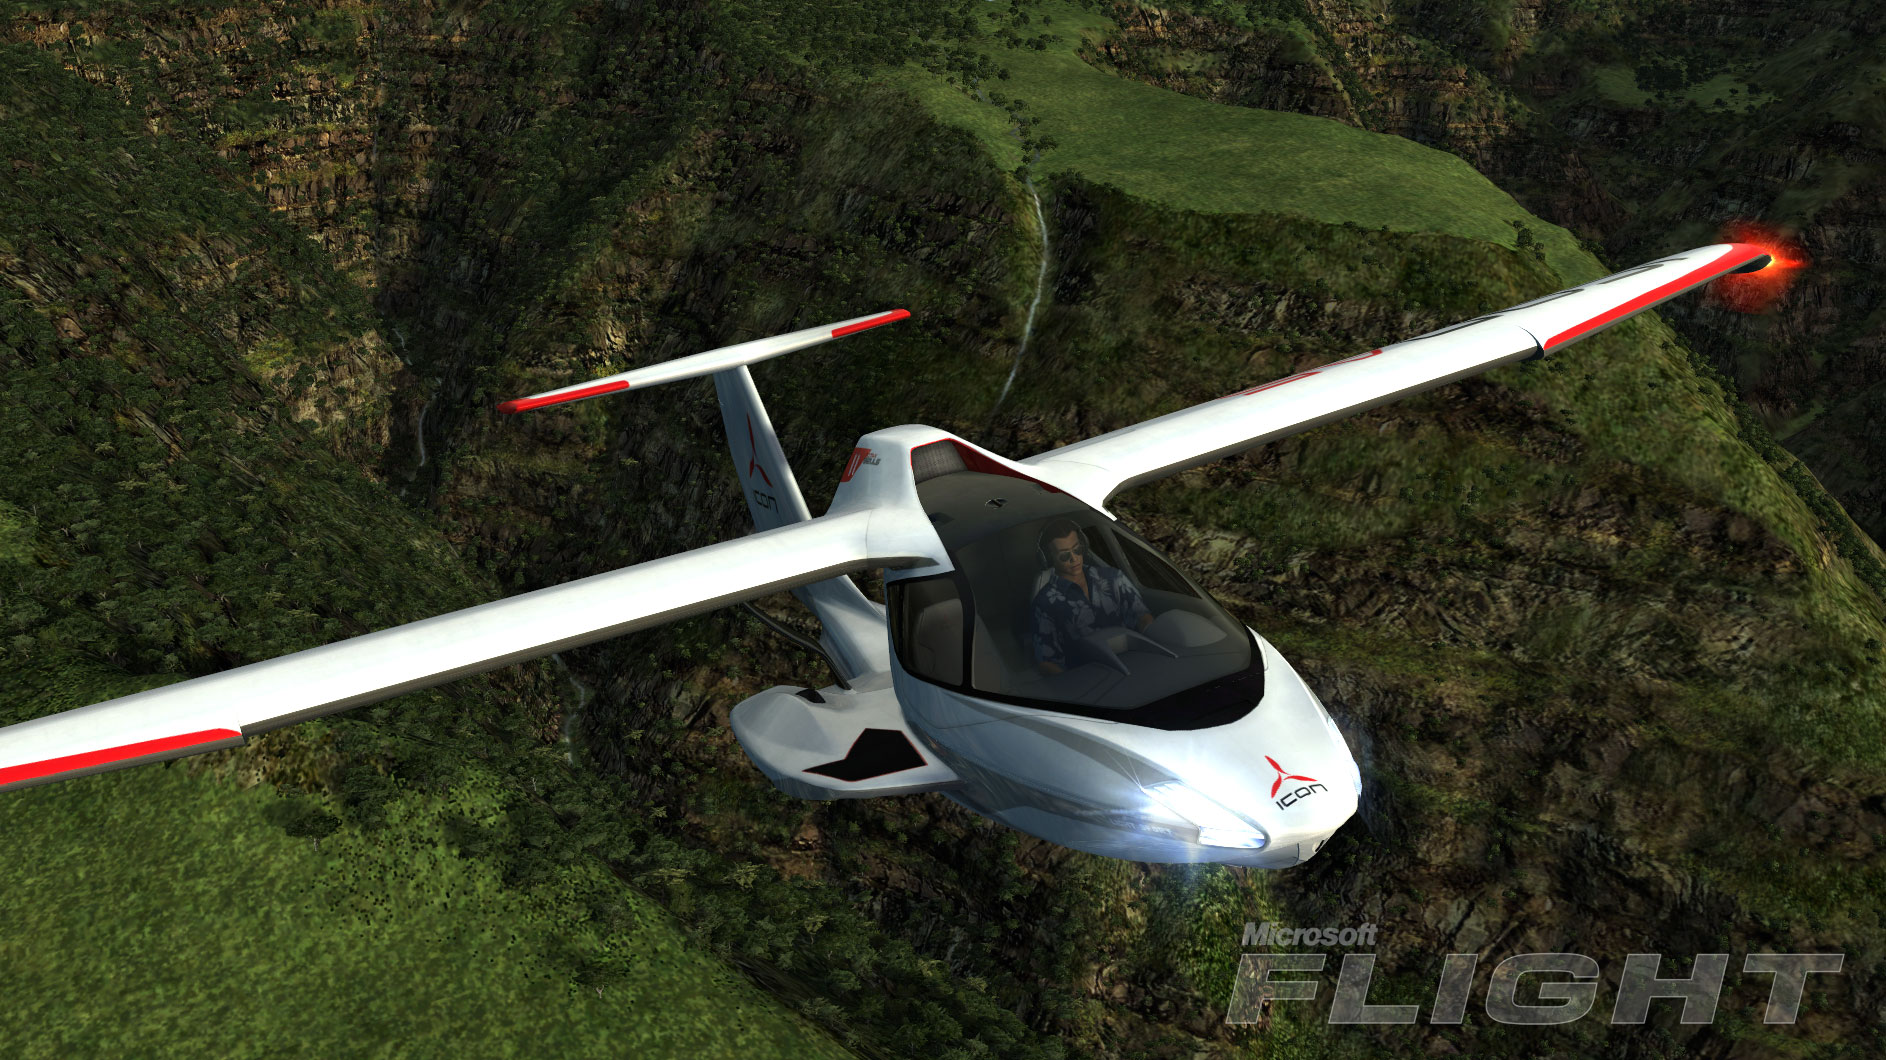 http://flyawaysimulation.com/modules/Images/gallery/microsoft-flight/Icon_HeroShot.jpg